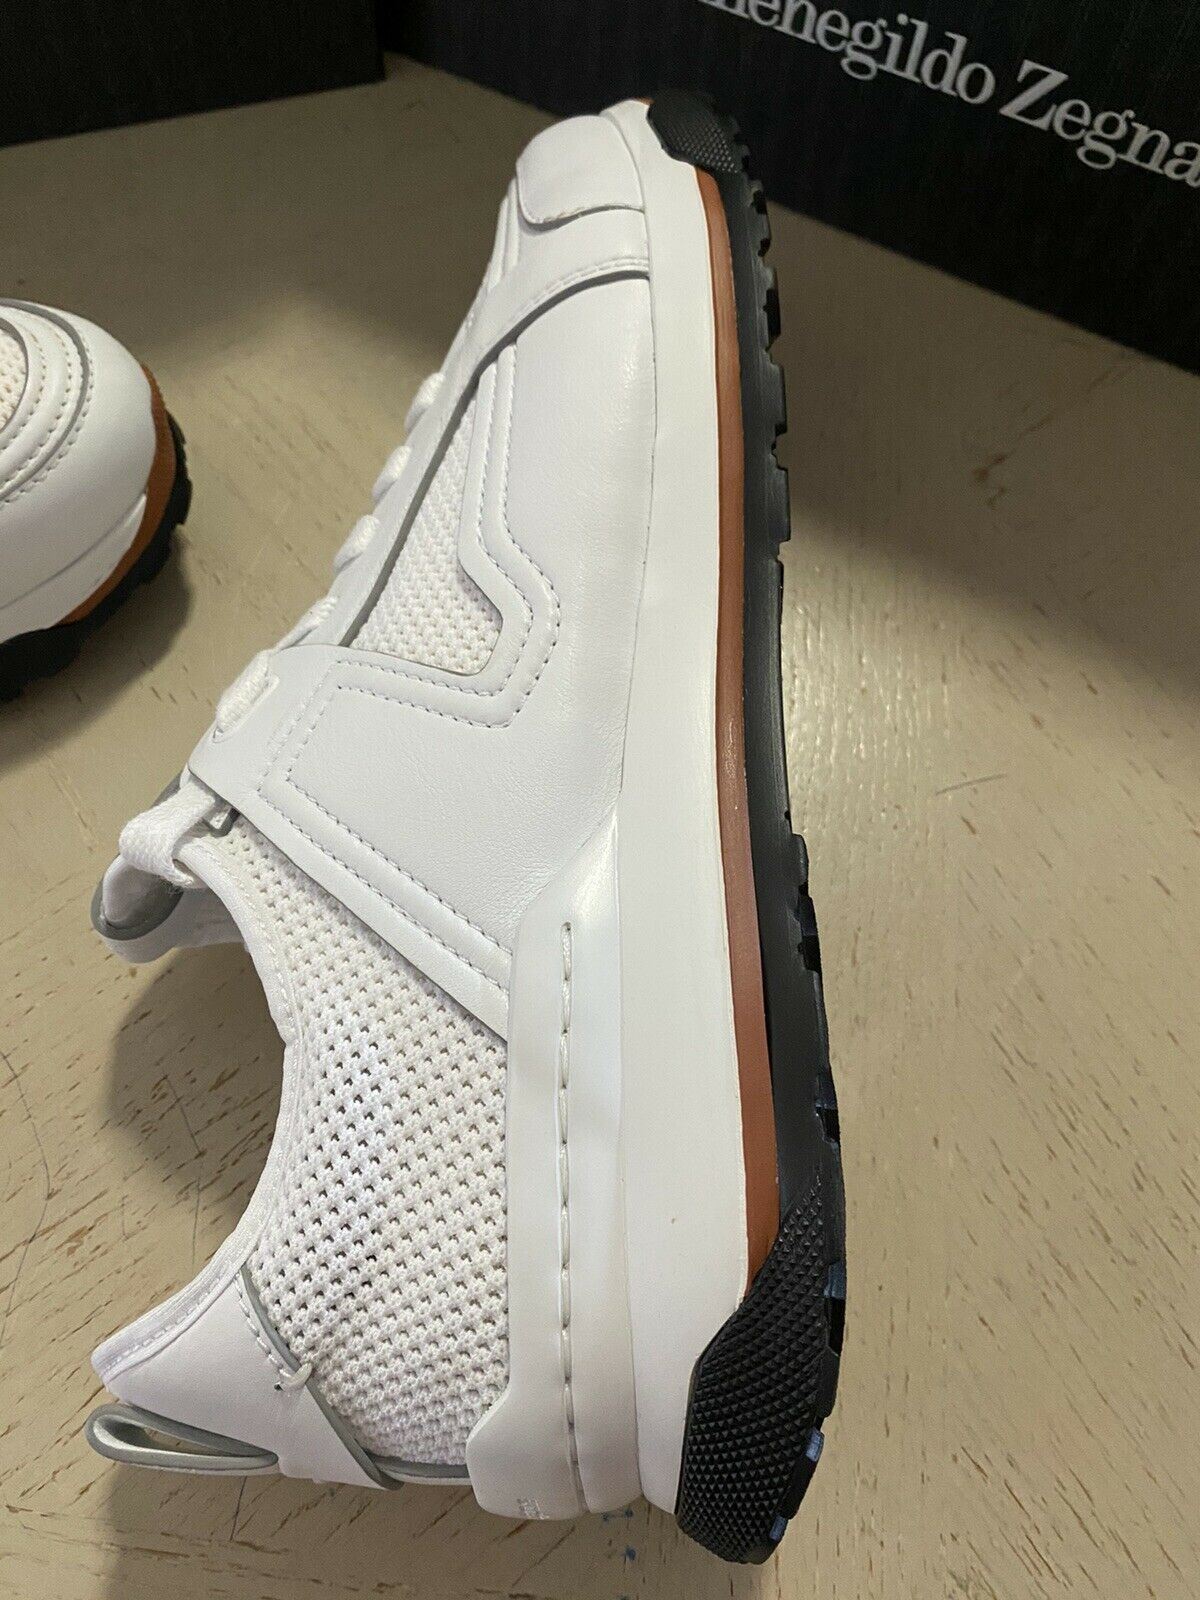 New $775 Ermenegildo Zegna Leather Sneakers Shoes White 10.5 US Italy